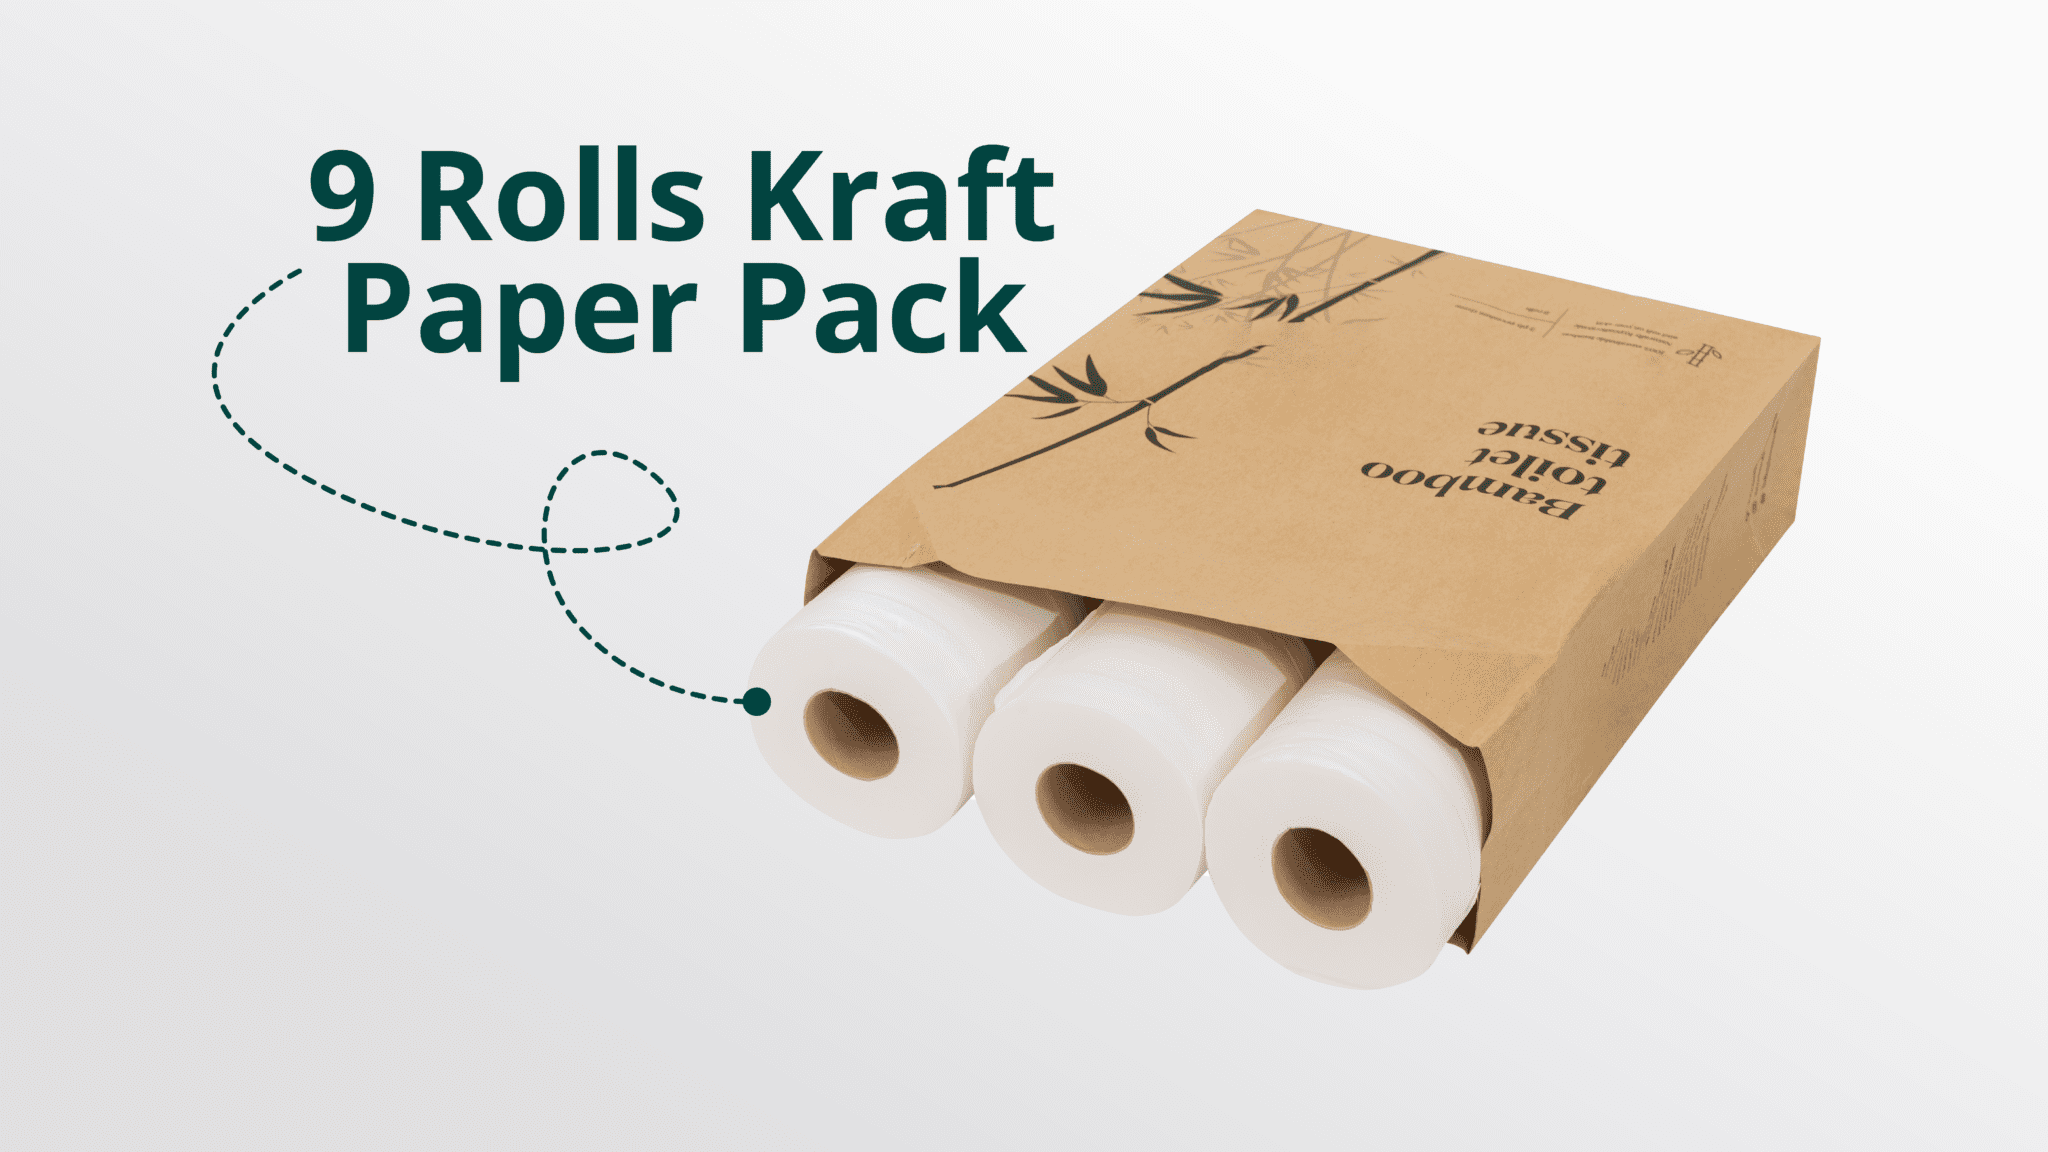 9 rolls kraft paper pack toilet paper